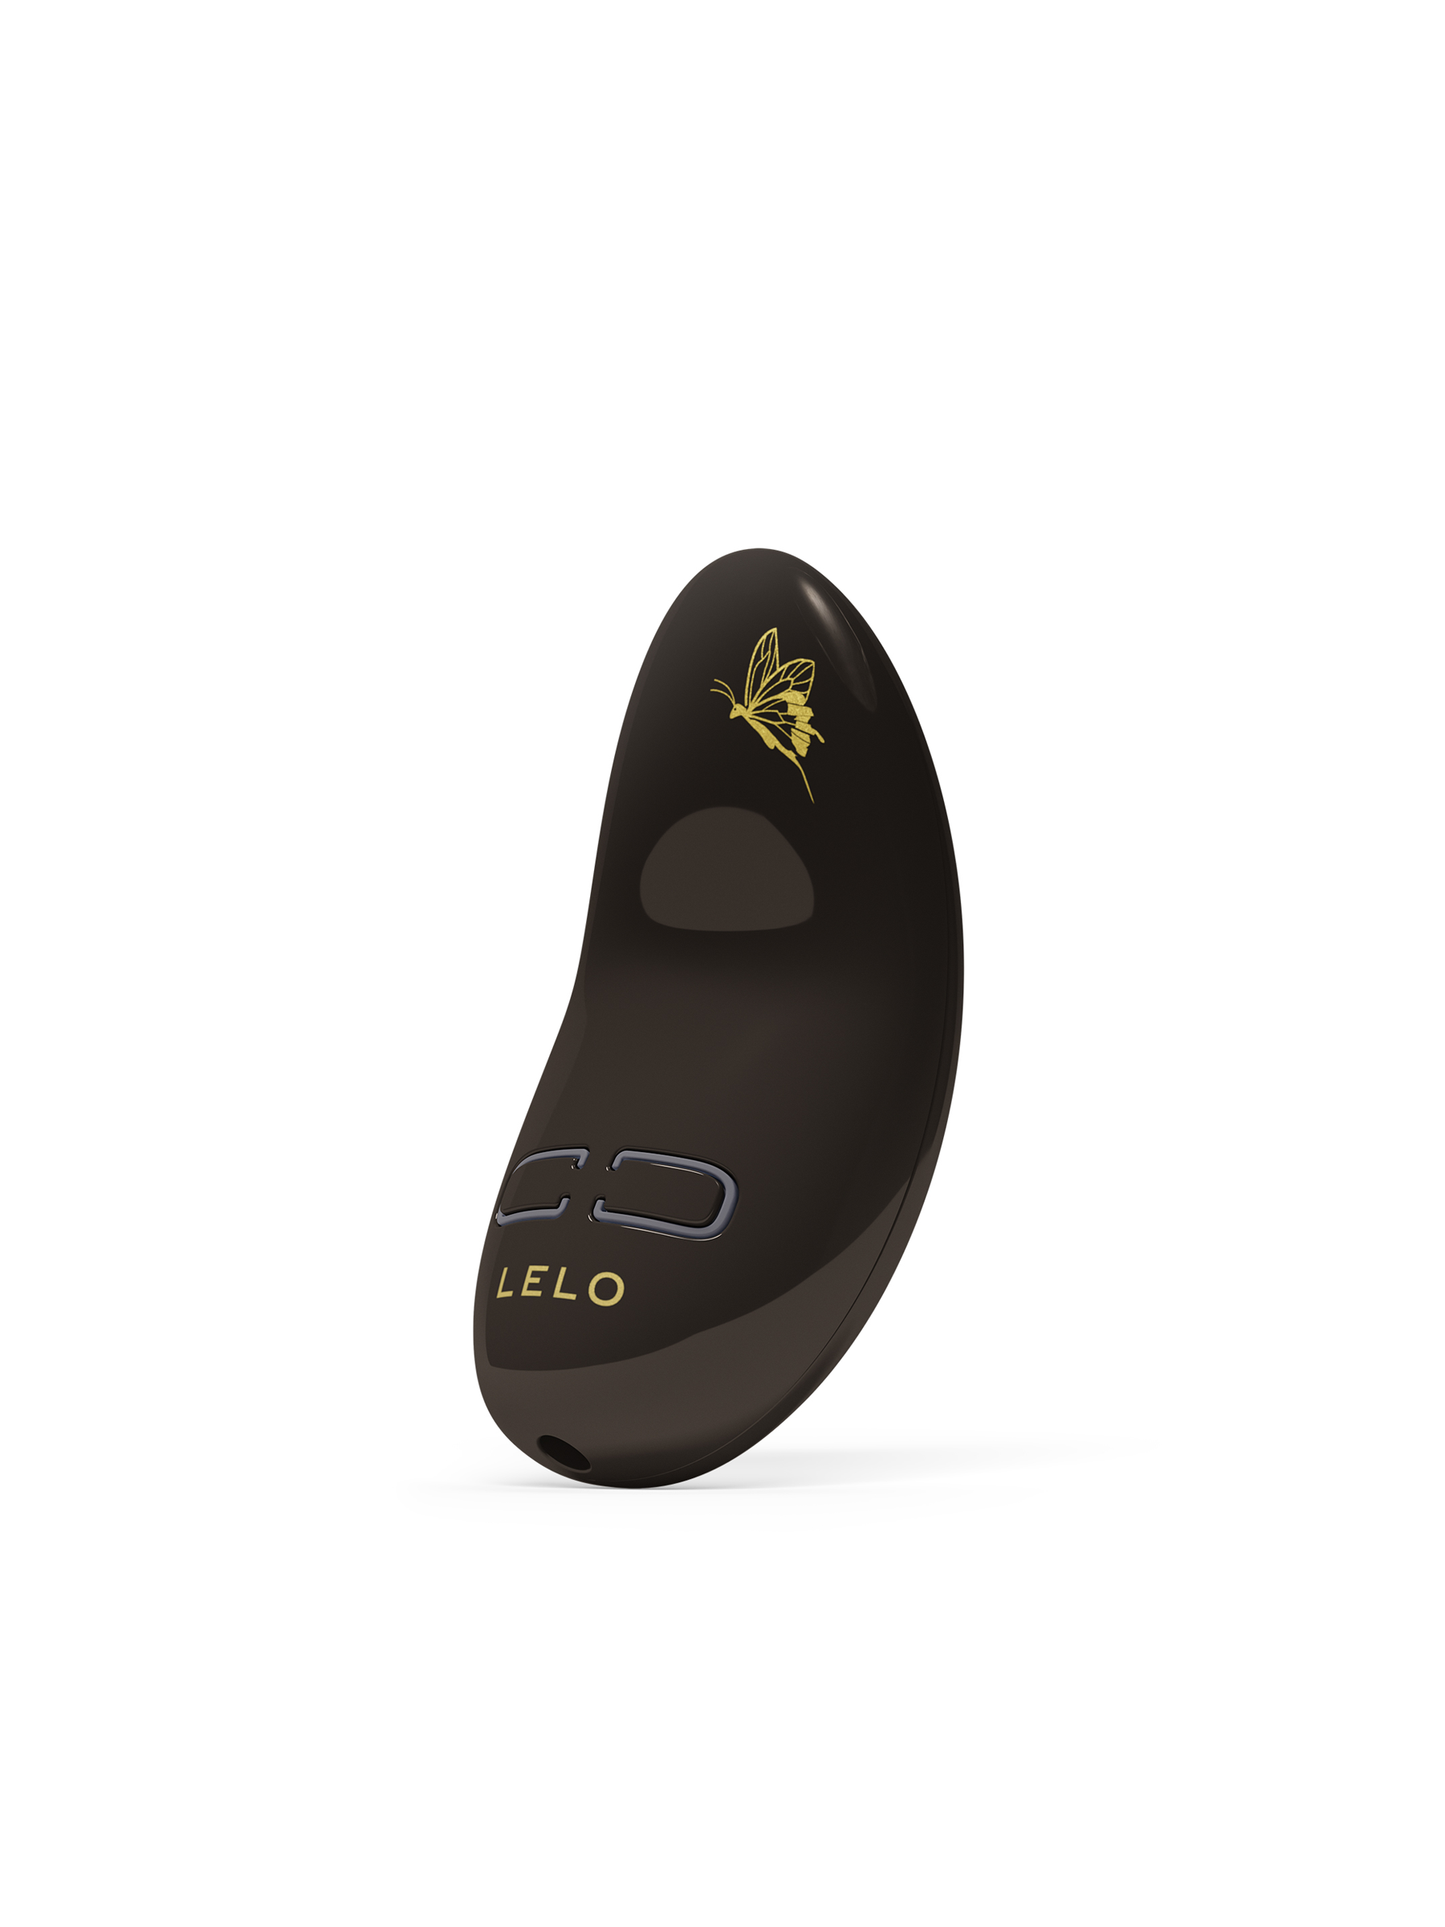 LELO Nea 3 Vibrator with butterfly detail